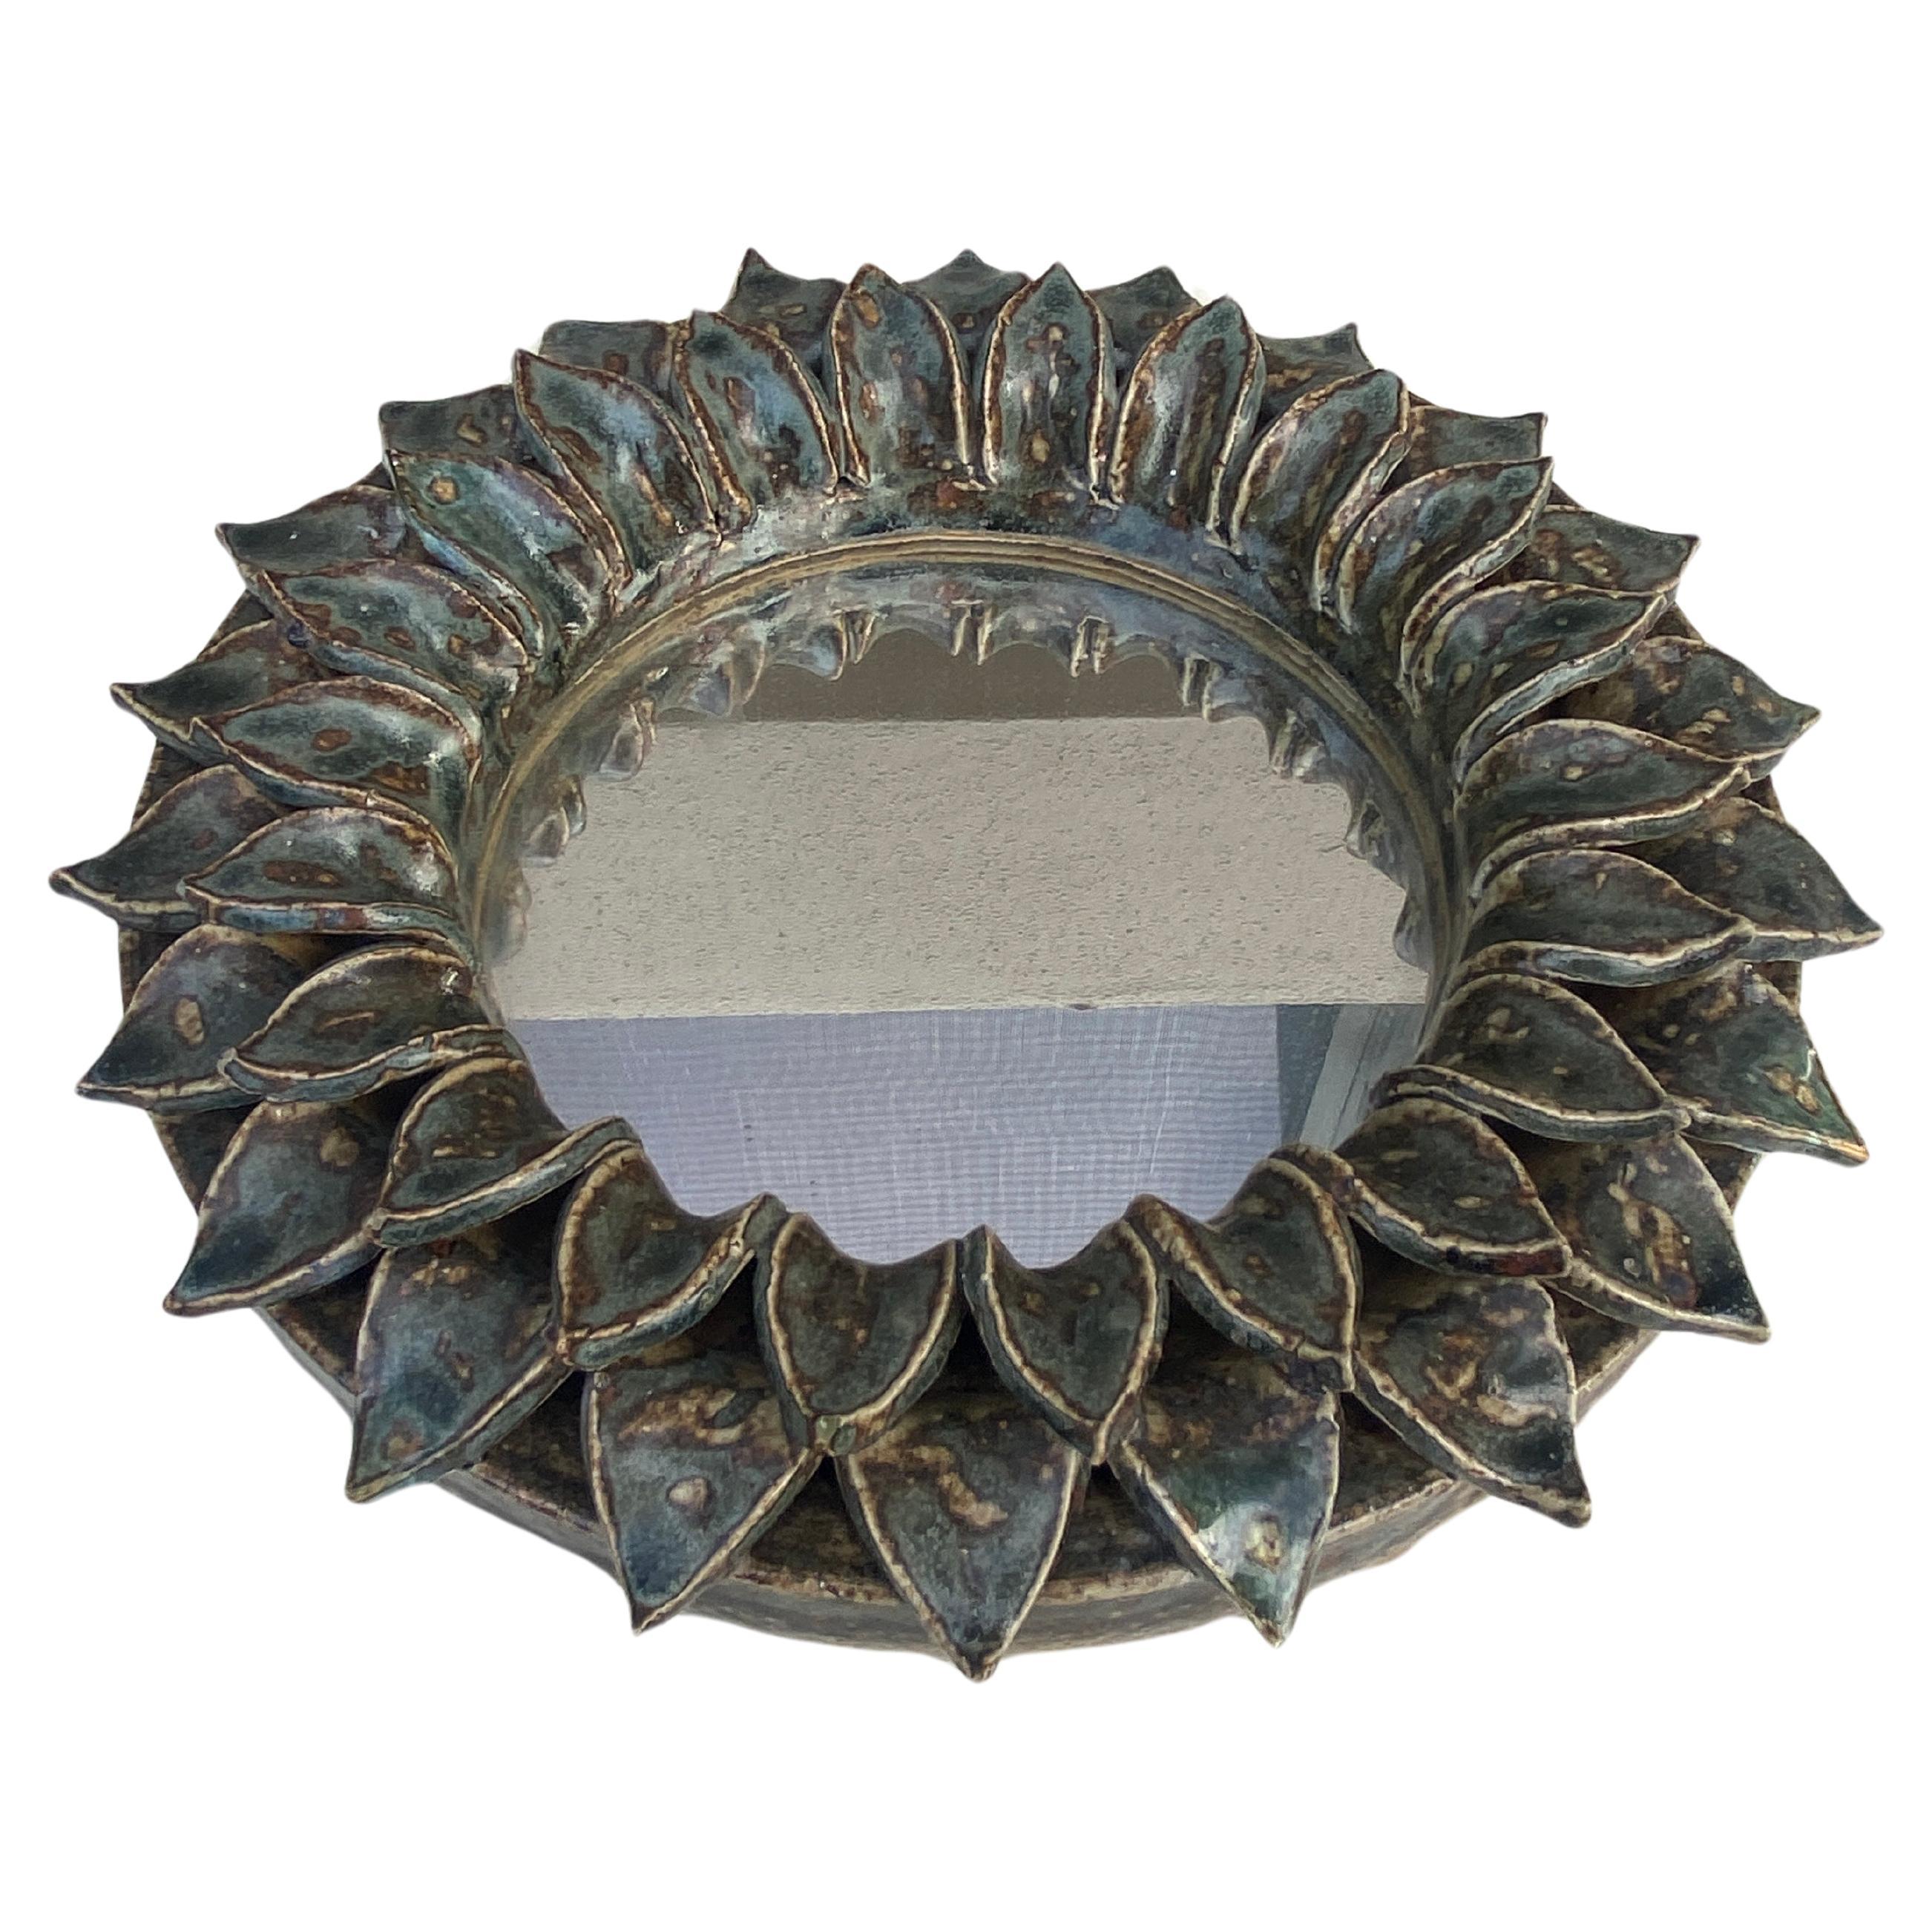 Mid-Century French Ceramic Round Leaves Mirror.
Diameter / 11 inches.